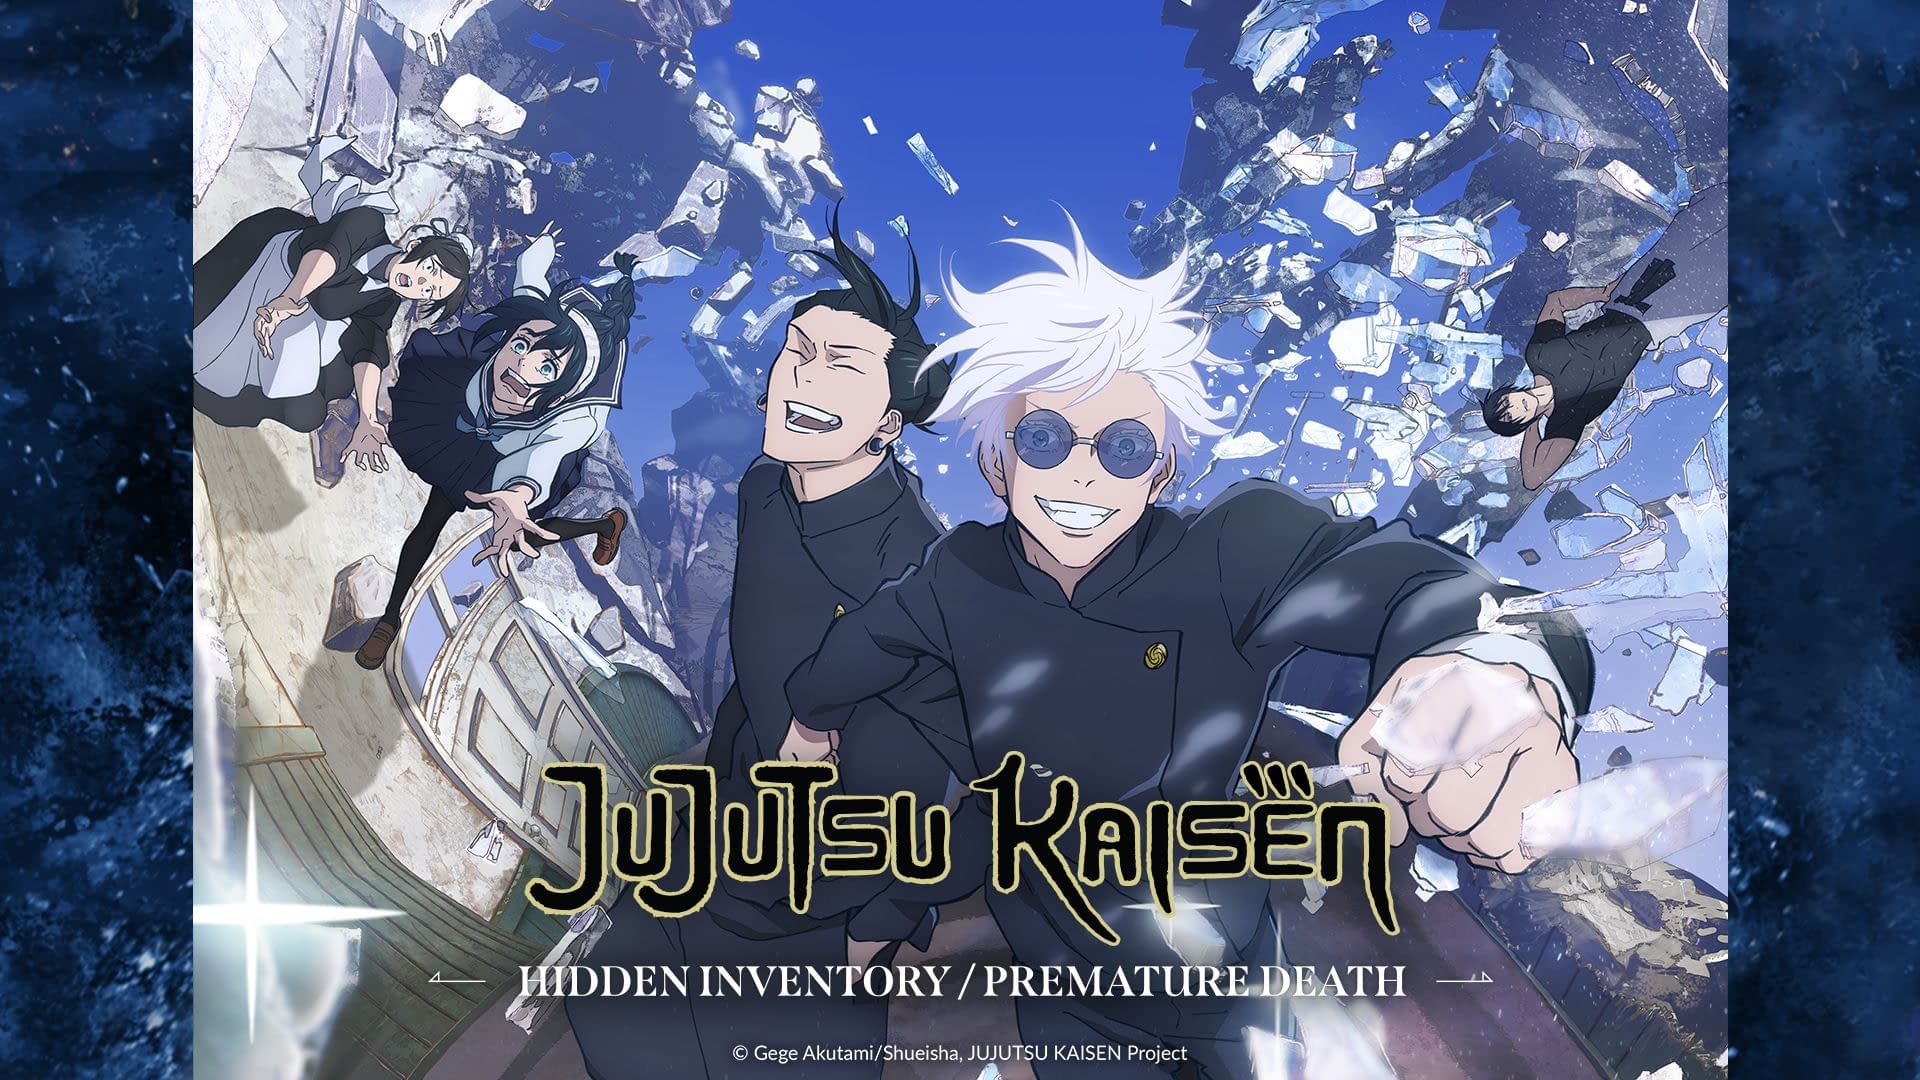 Anime On ComicBook.com on X: Jujutsu Kaisen Season 2 is